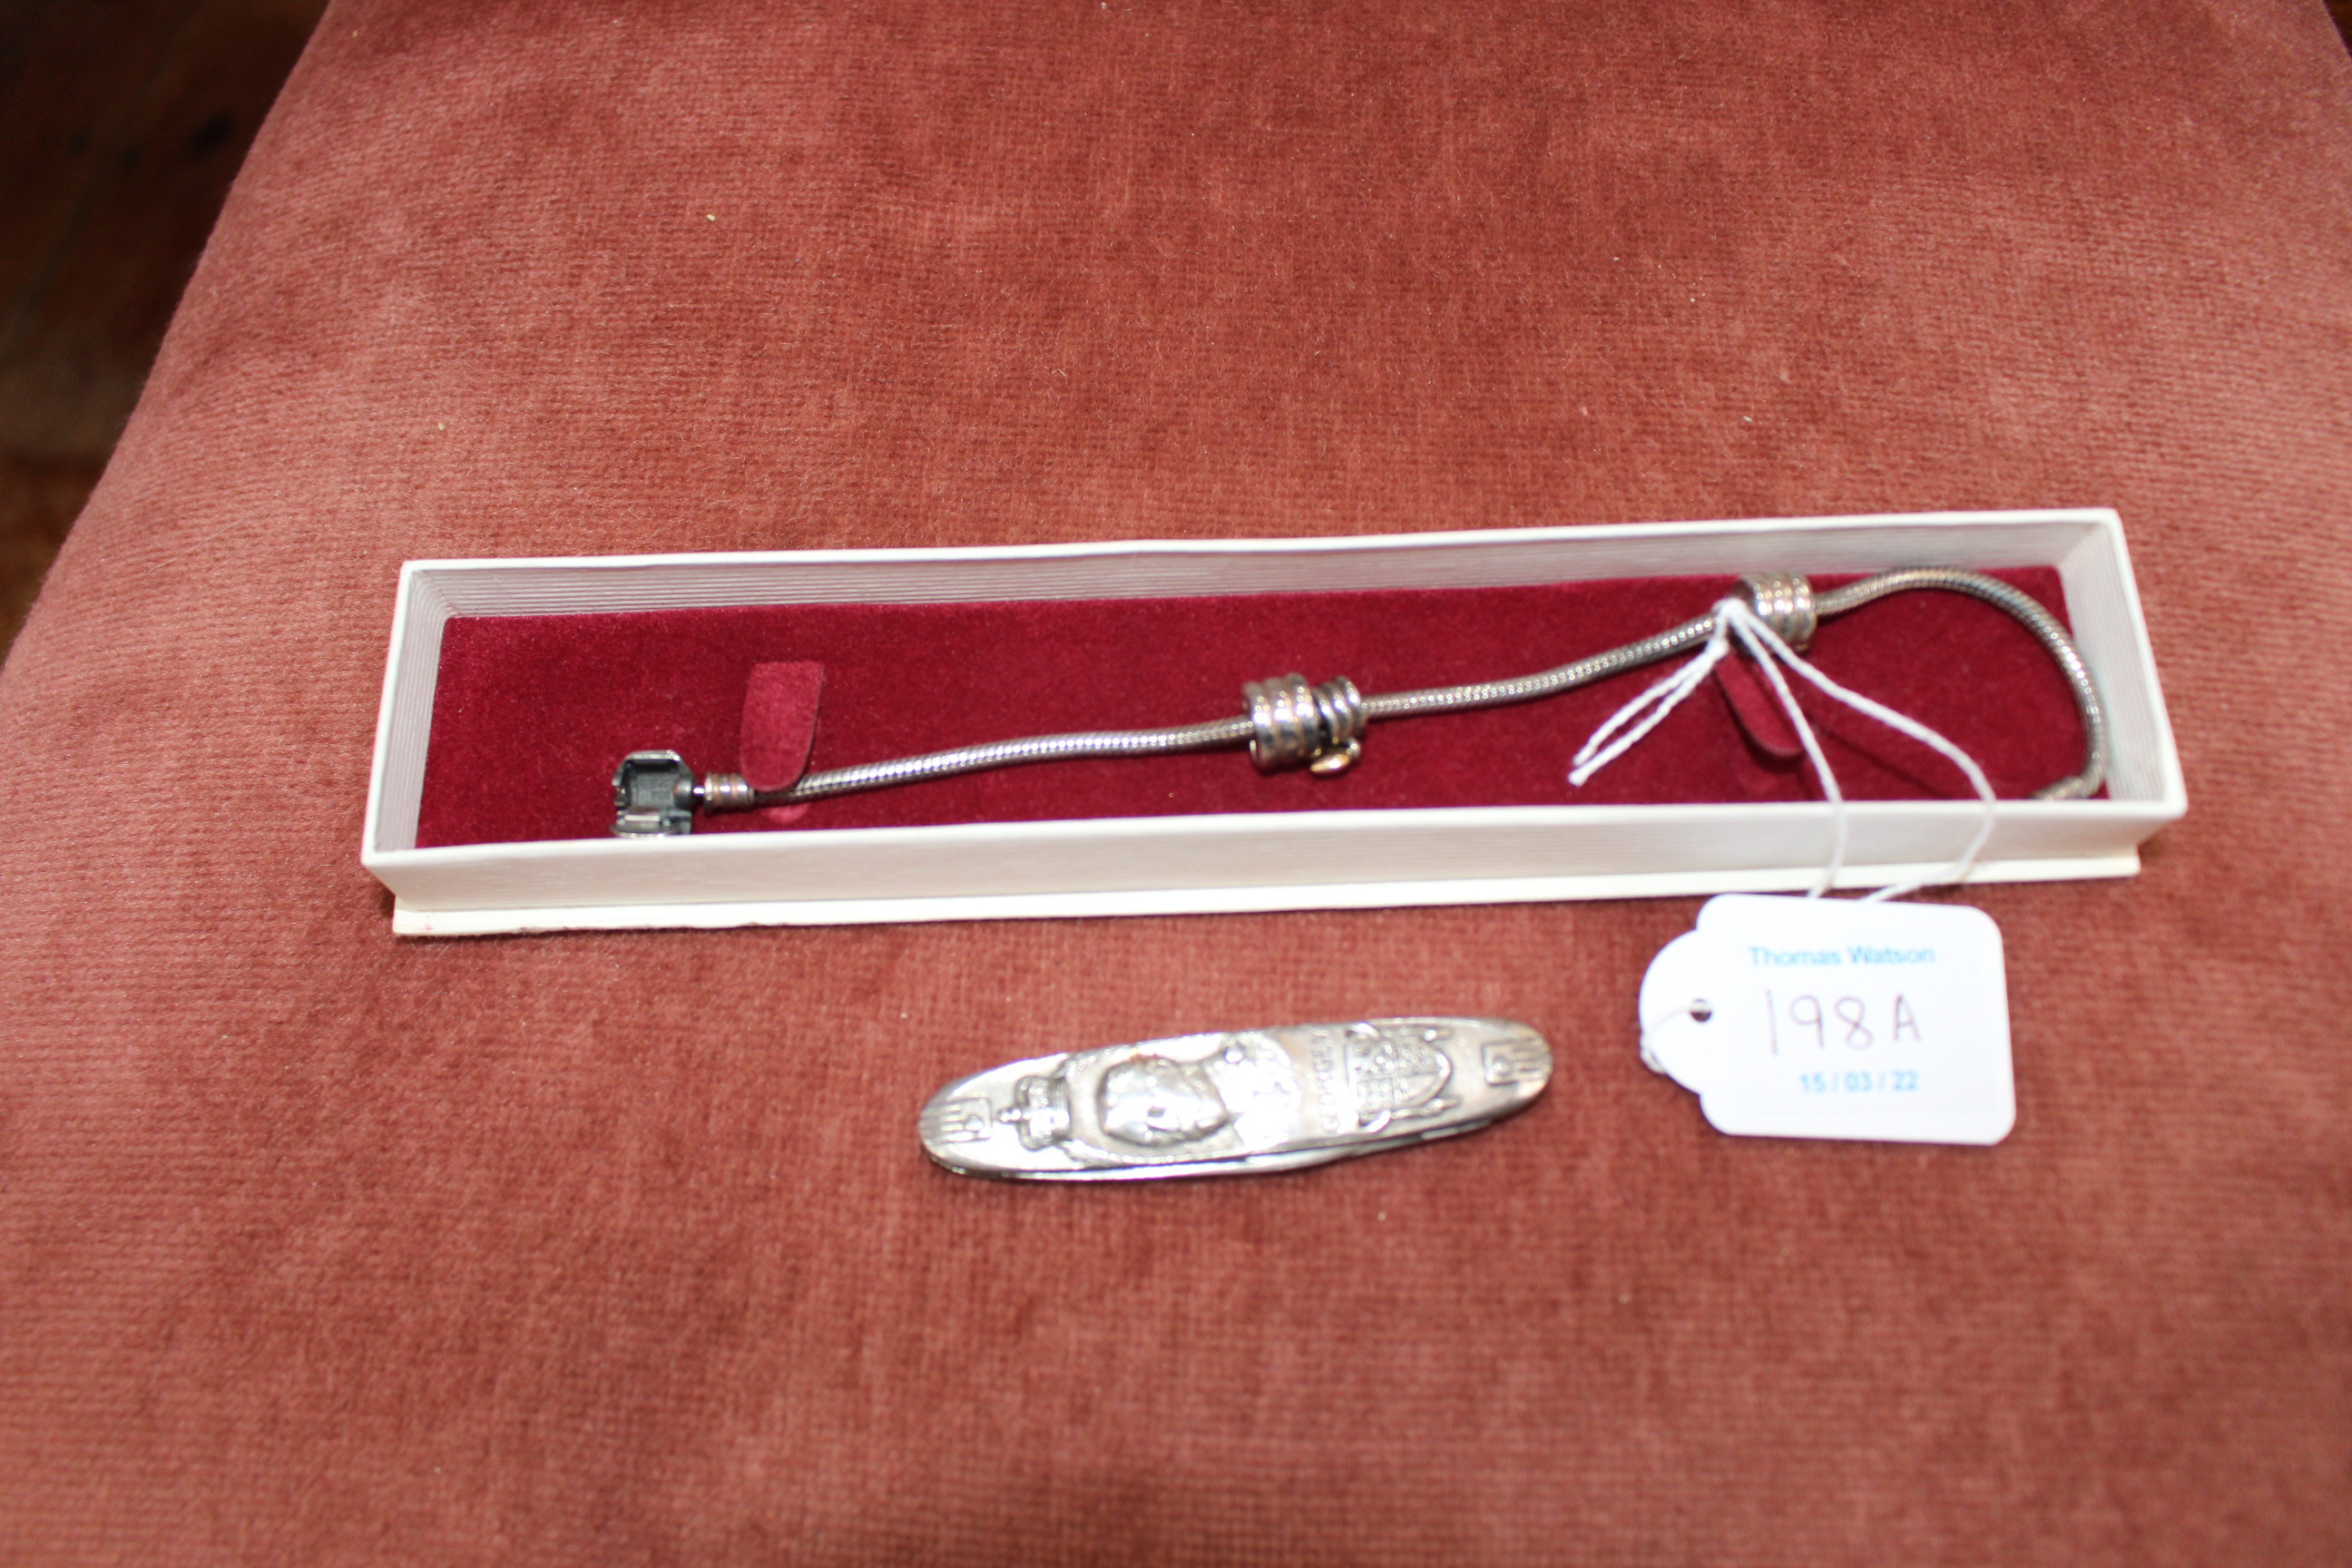 Bracelet marked Pandora and commemorative pen knife.